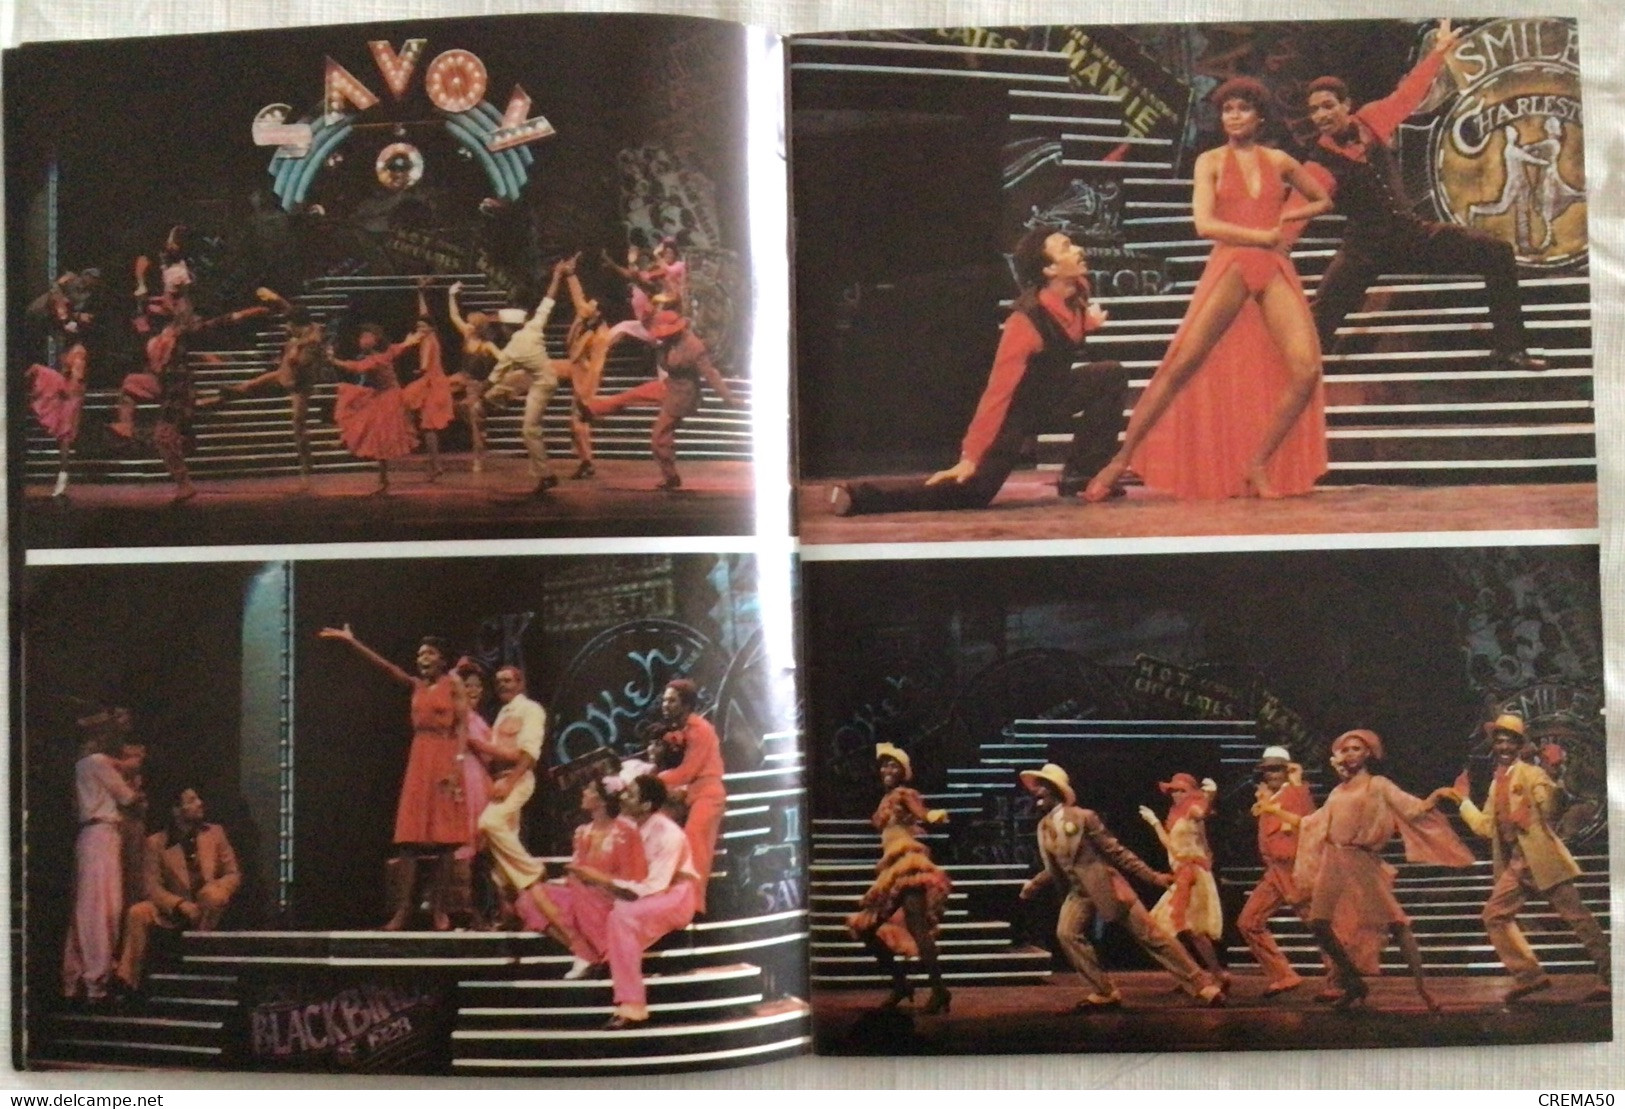 Rare Programme, Harlem Année 30 . Bubblng Brown Sugar .1978